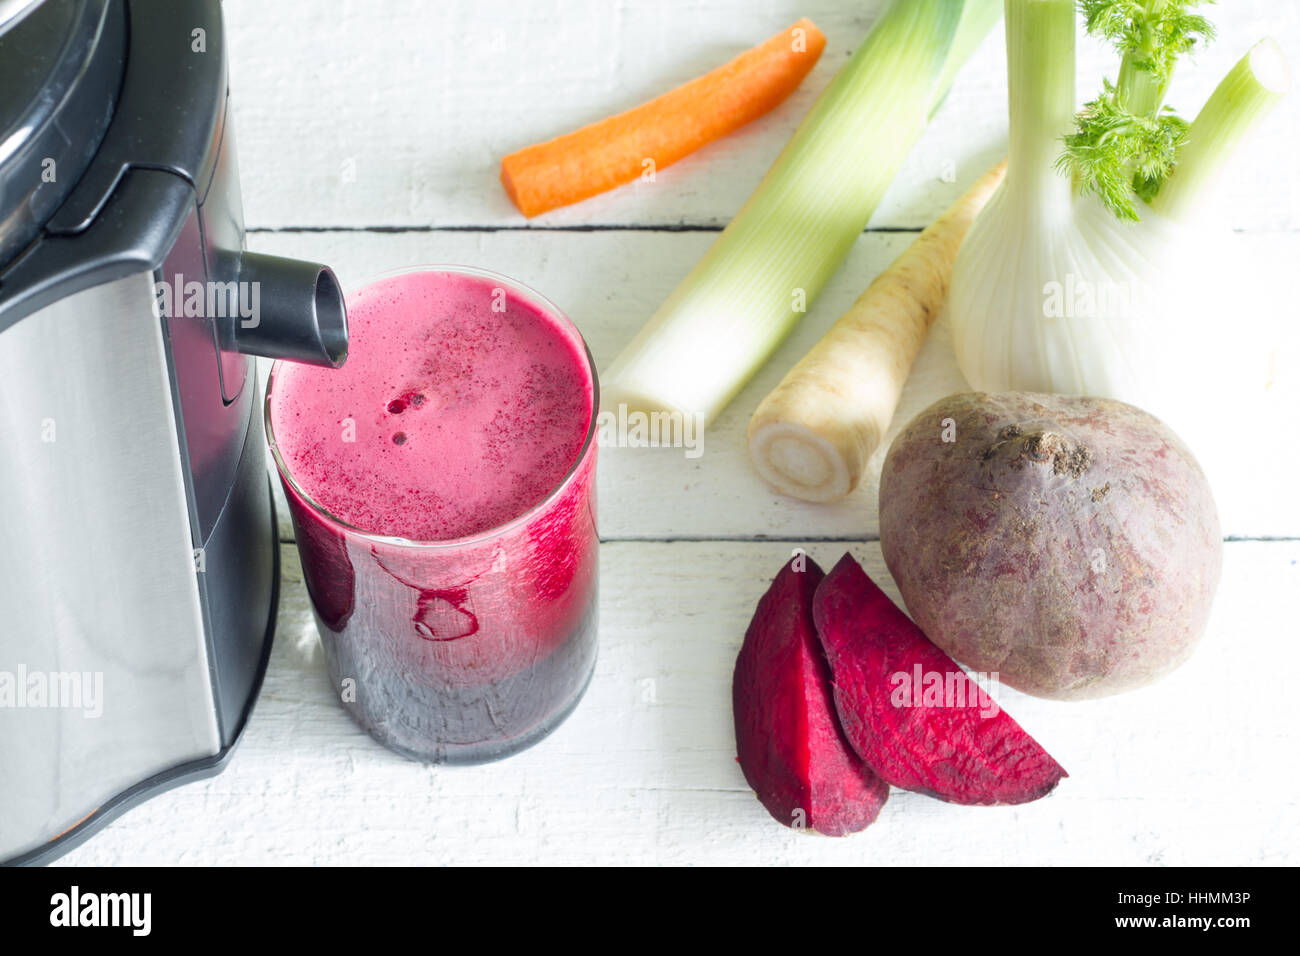 Juicer, red beetroot juice, other vegetables health diet detoxification concept Stock Photo